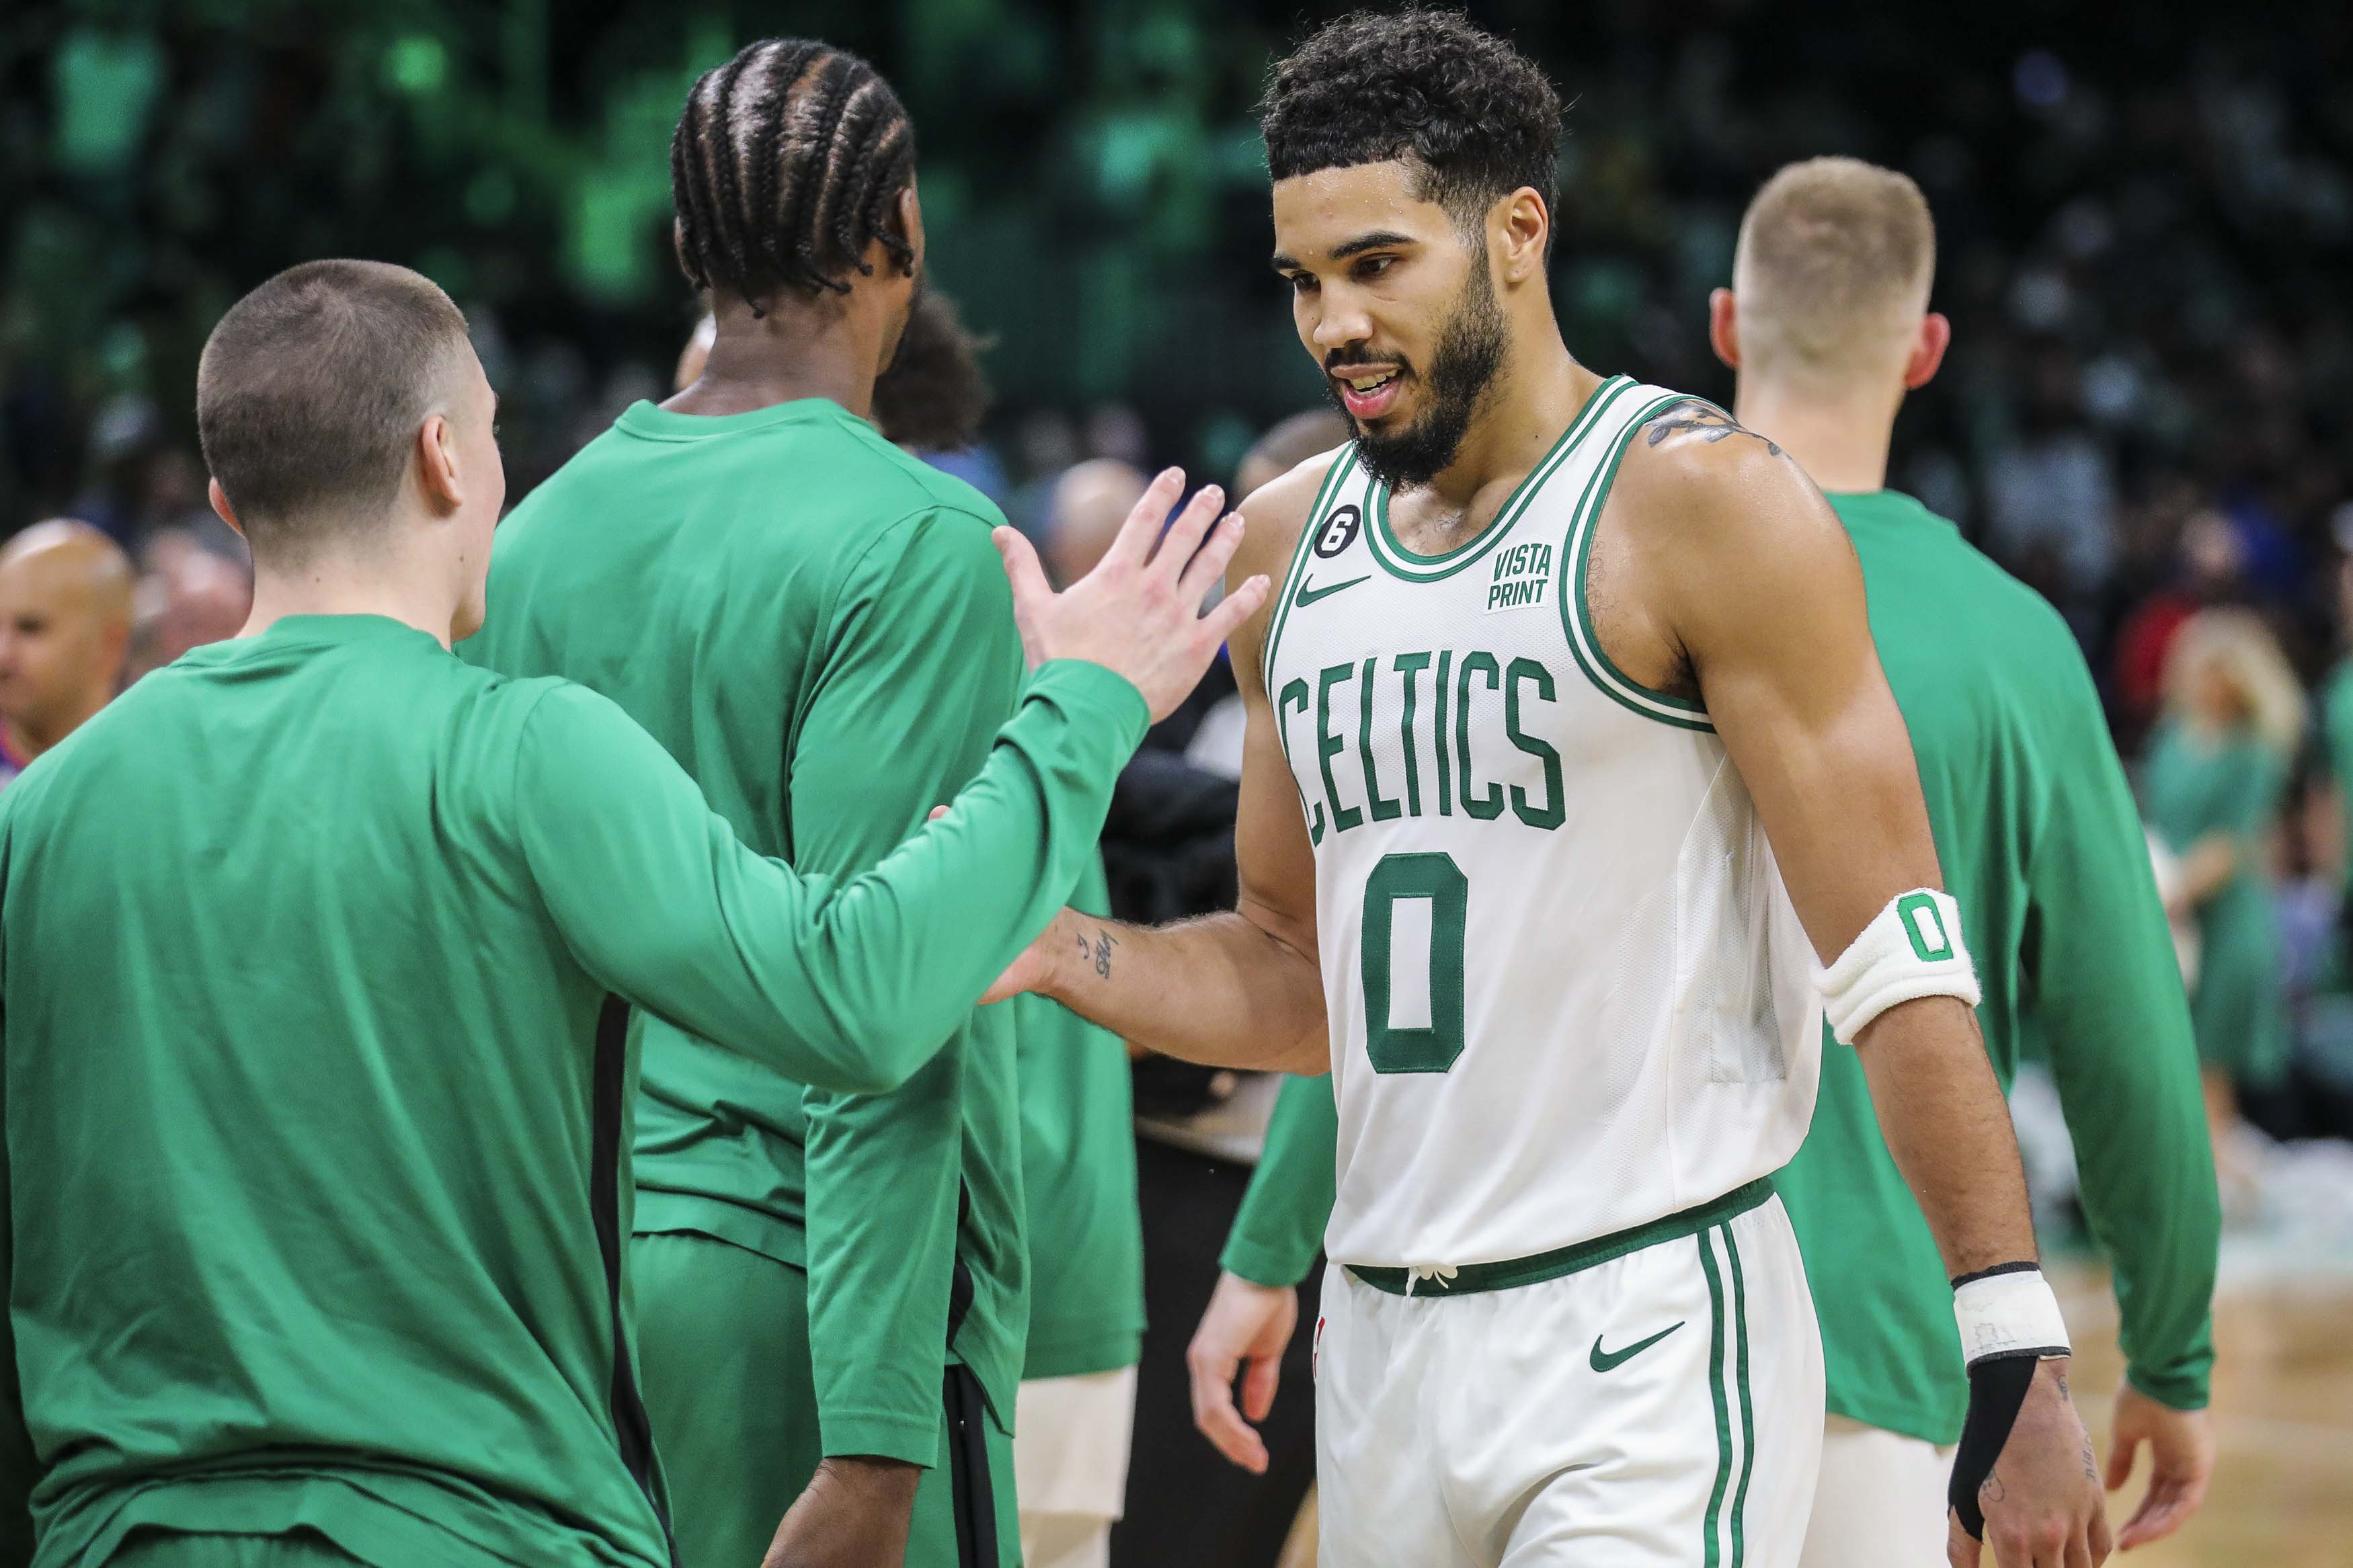 Tatum scores 40 in short-handed Celtics' win, National Sports